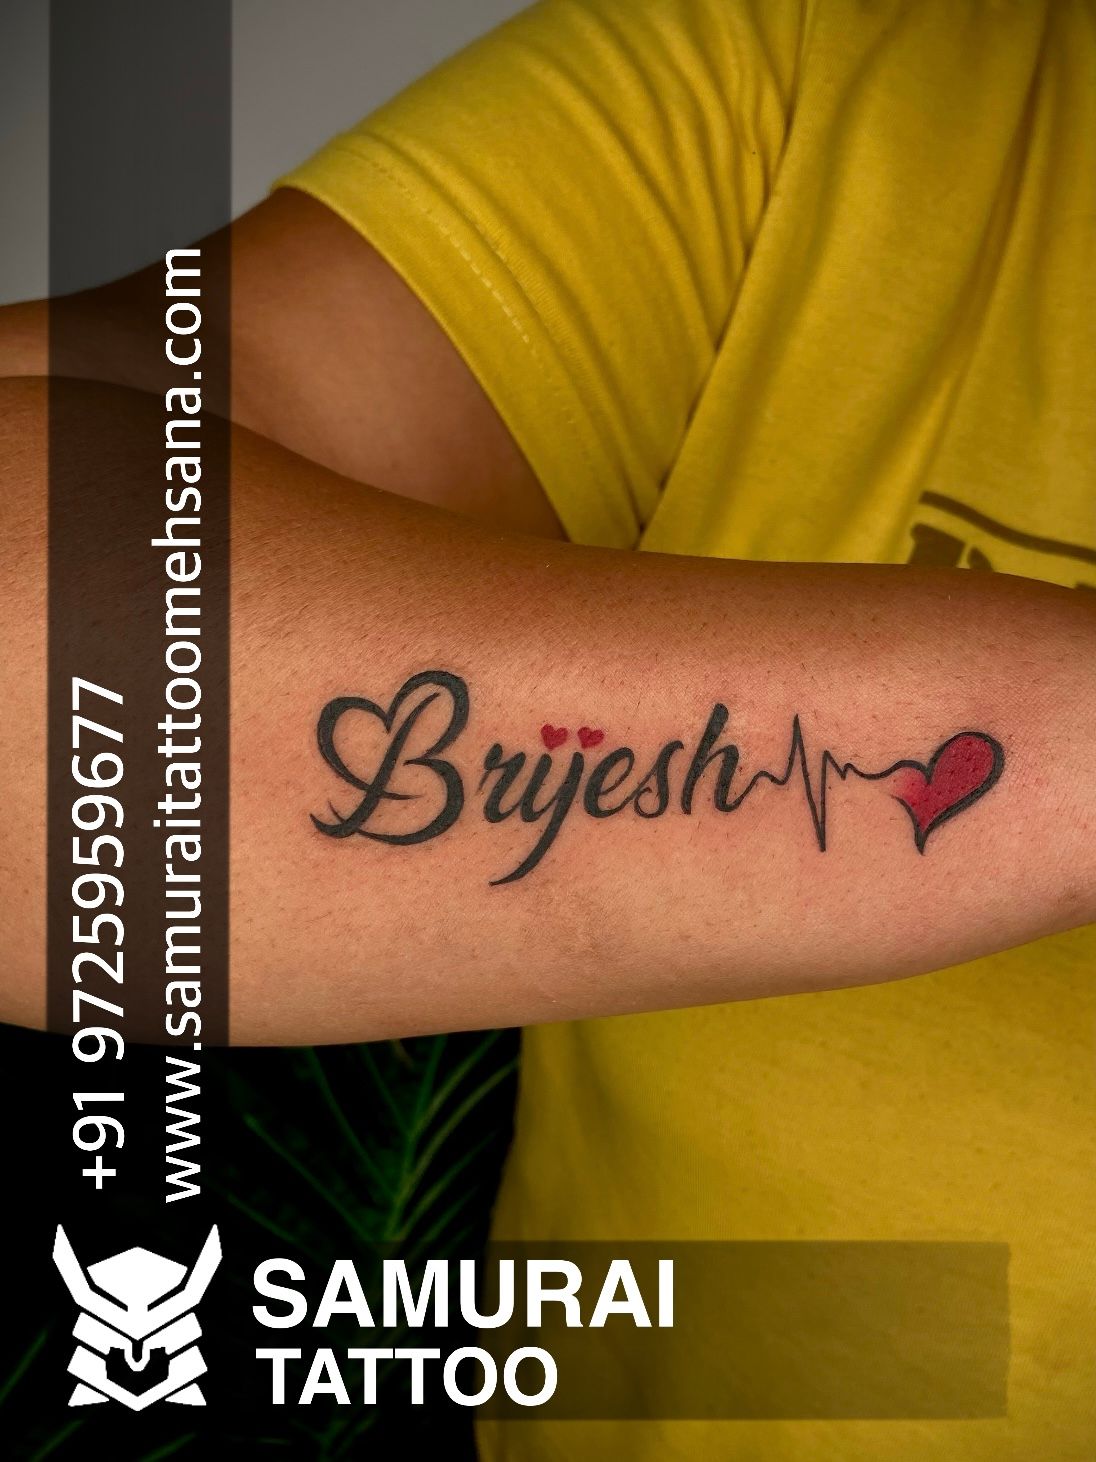 Jayesh name tattoo with heartbeat | Name tattoo, Tattoos, Meldi ma hd photo